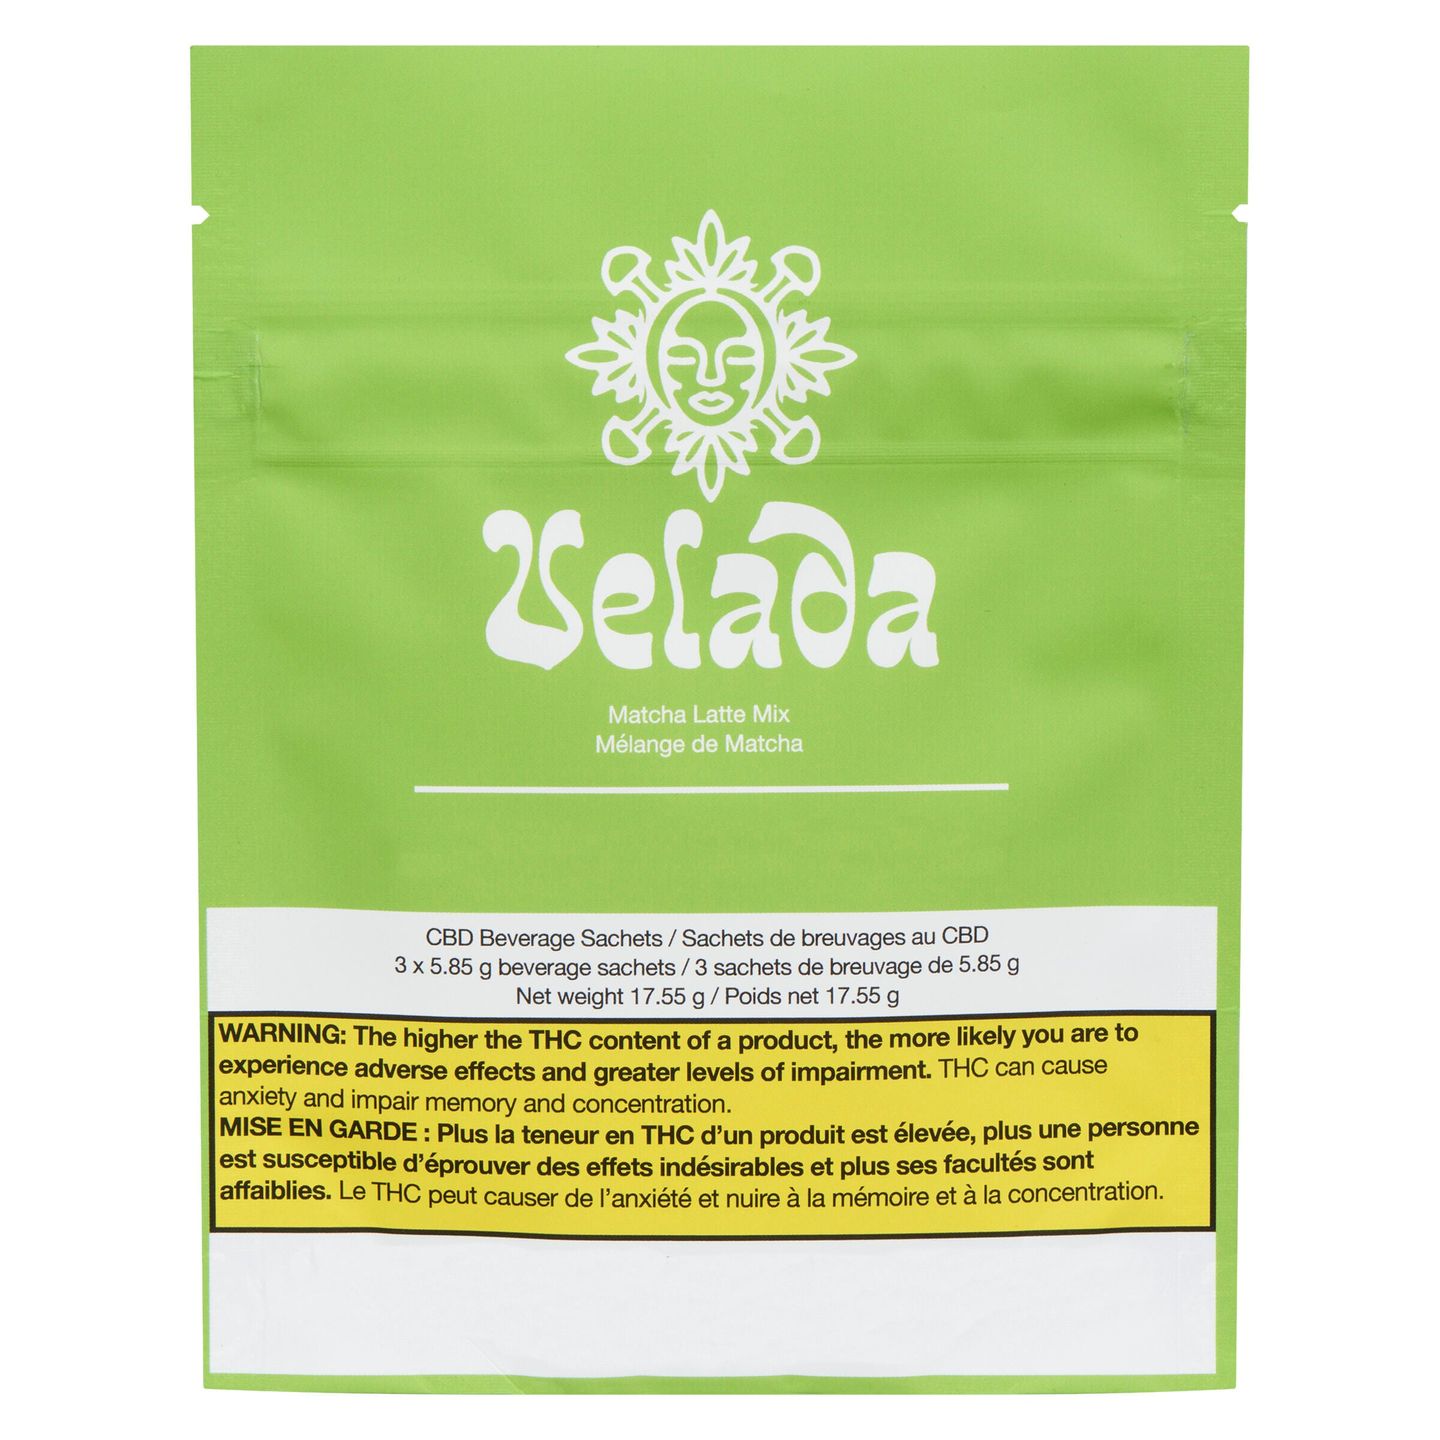 Cannabis Product Matcha Latte Mix by Velada